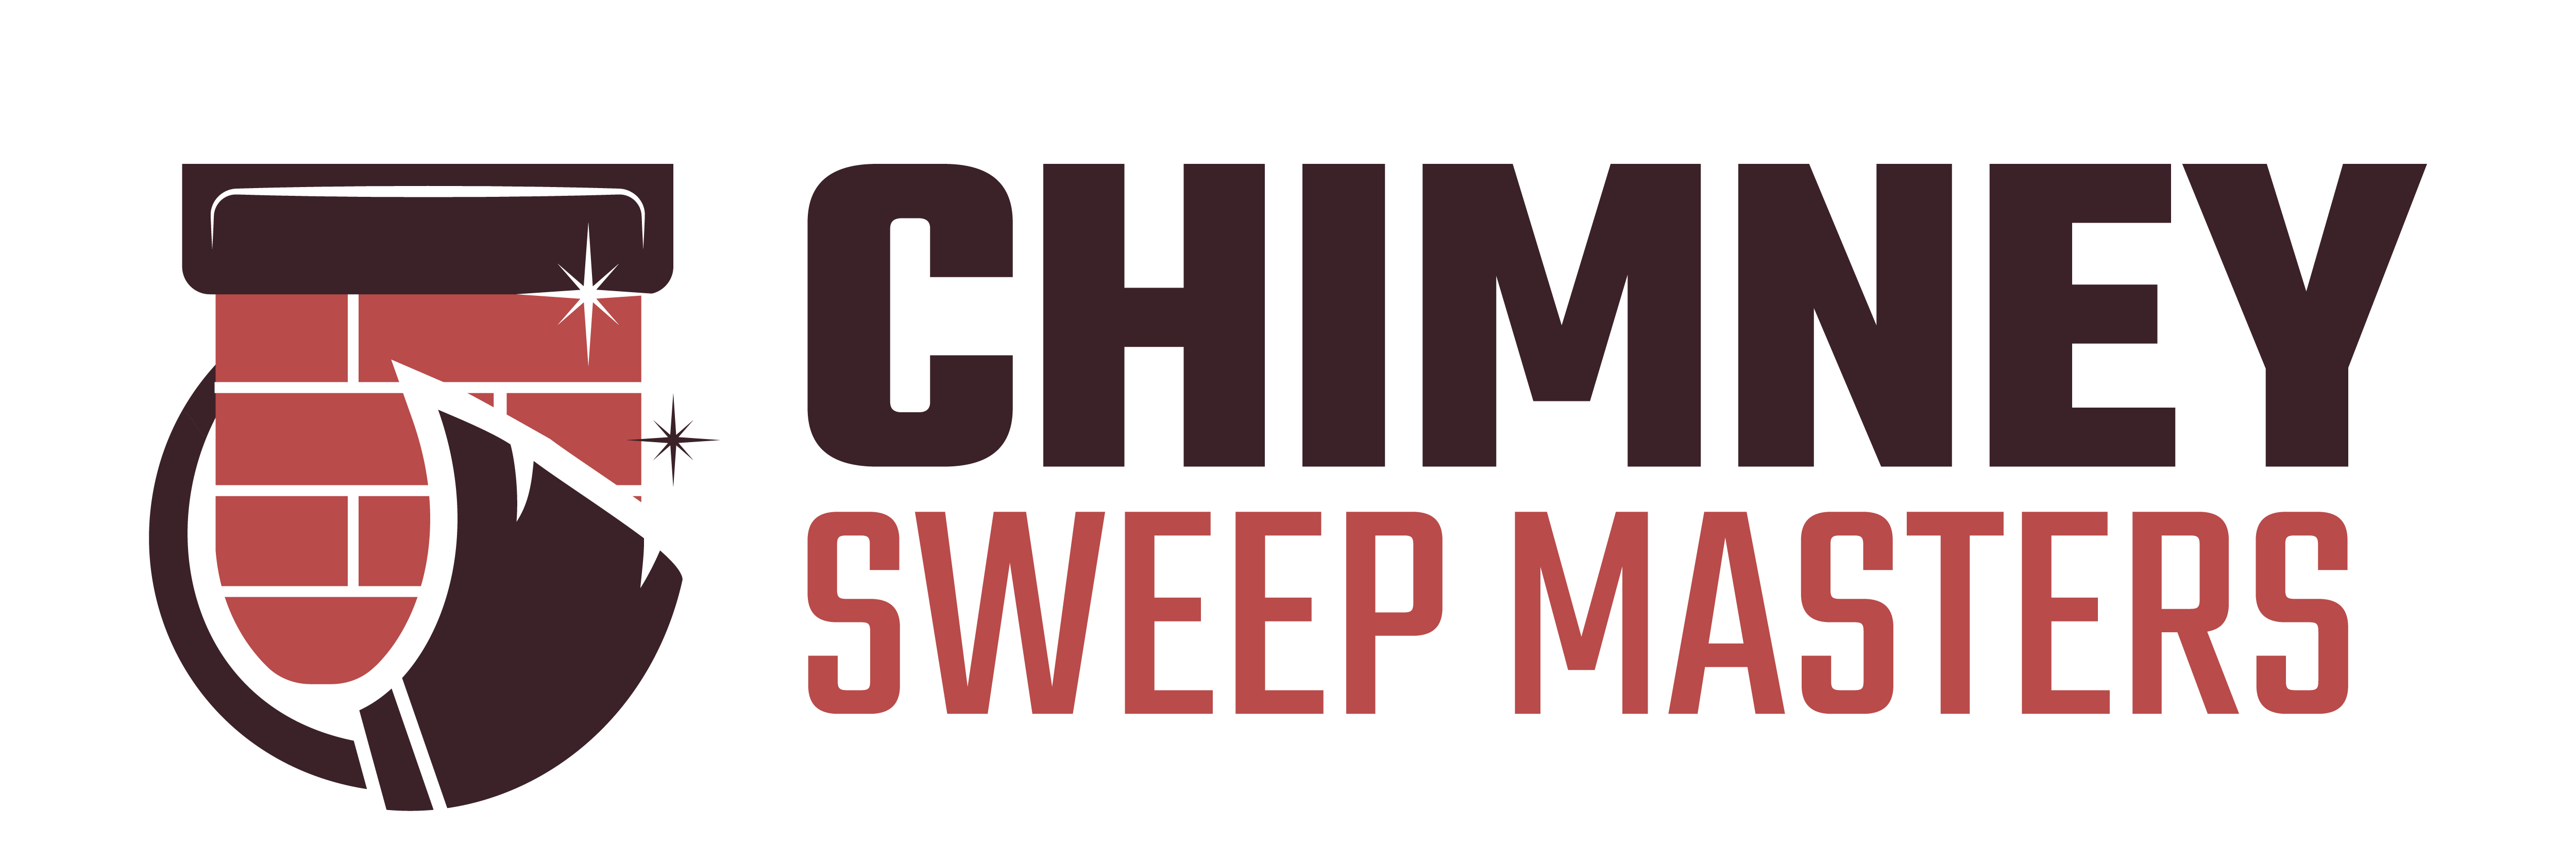 Chimney Sweep Masters Taft Heights Logo